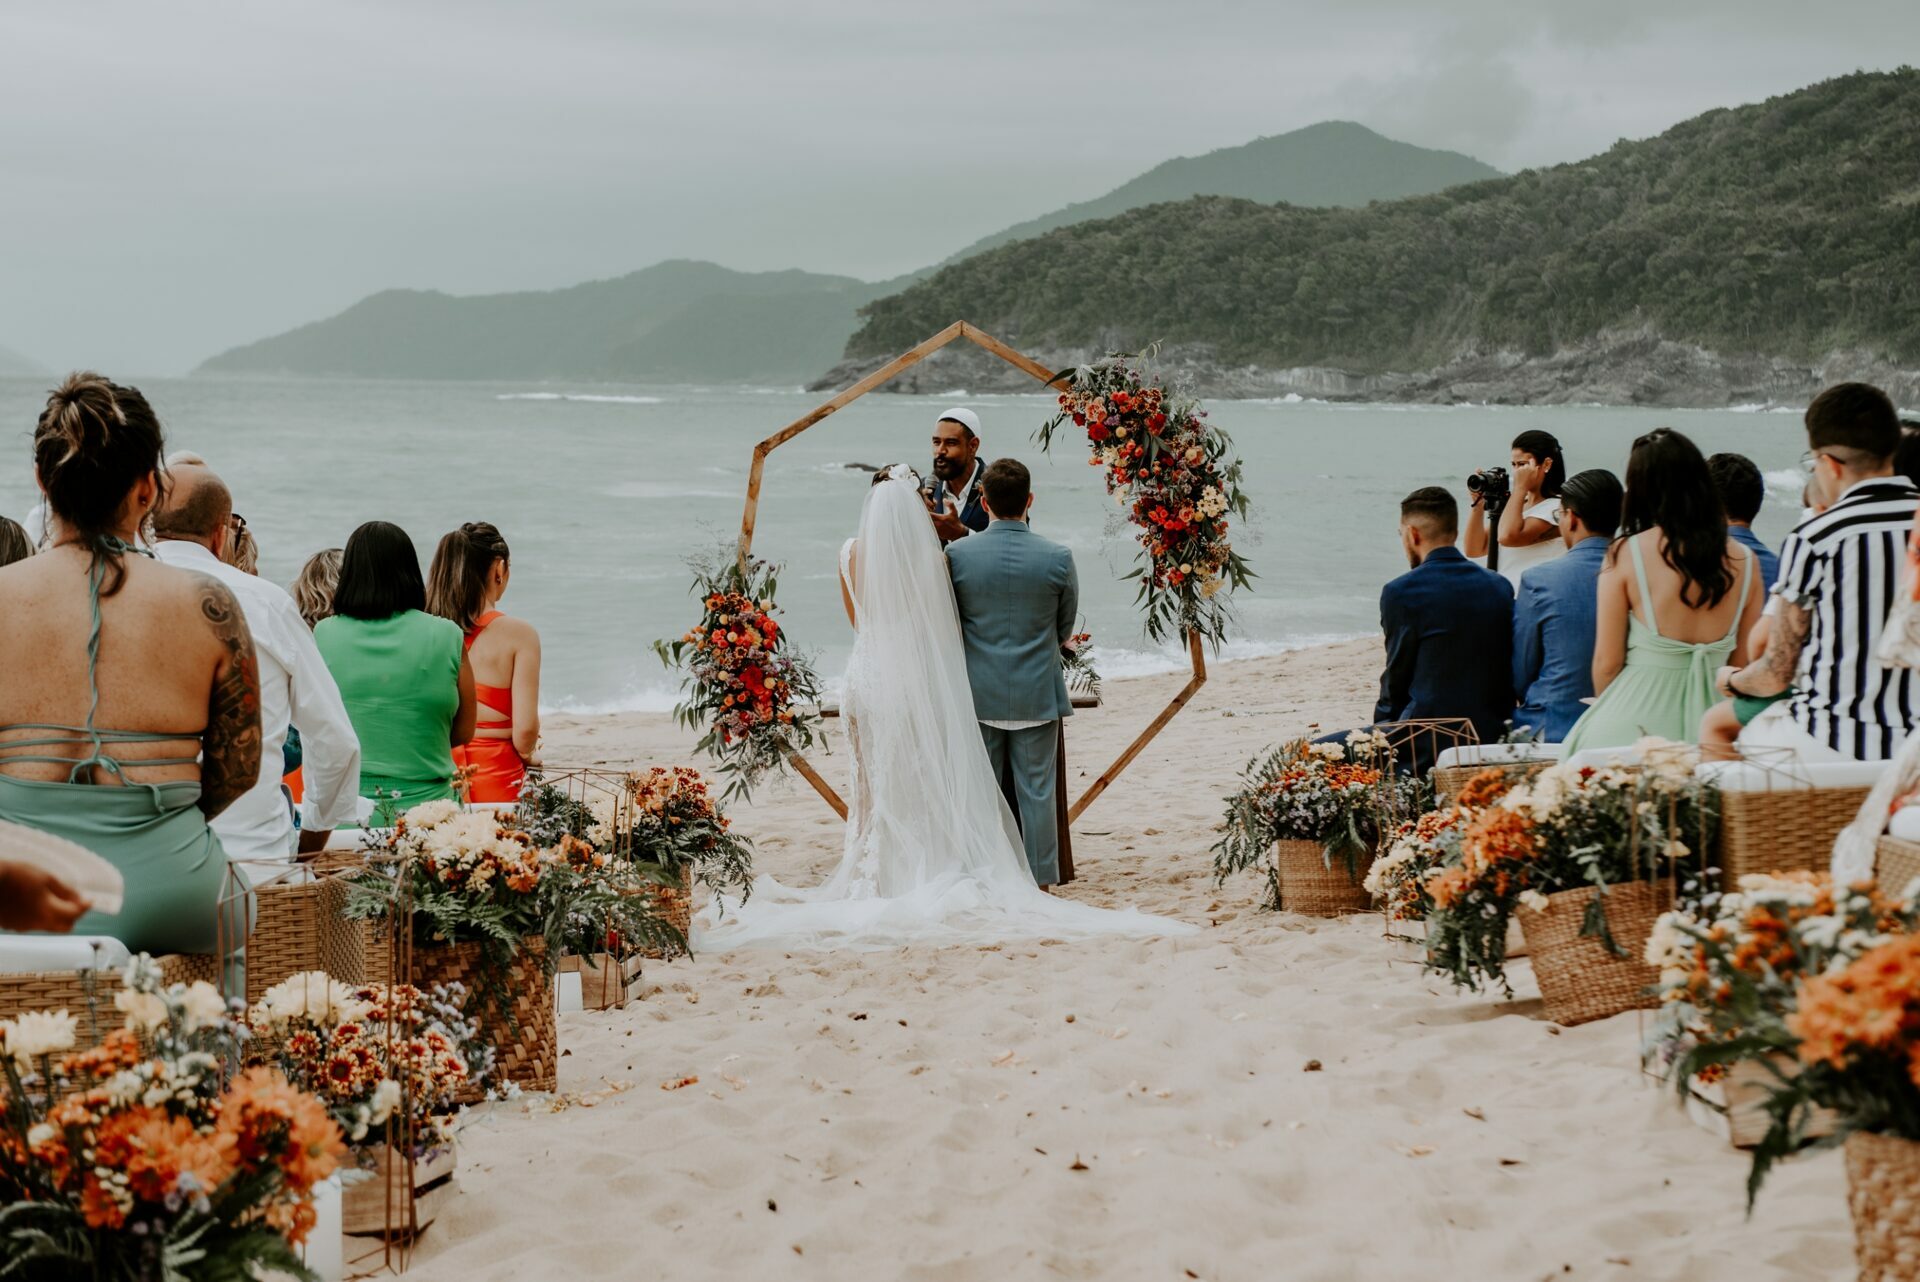 Alexia e Guilherme | Casamento vibrante na praia, por Stéfanie Belo